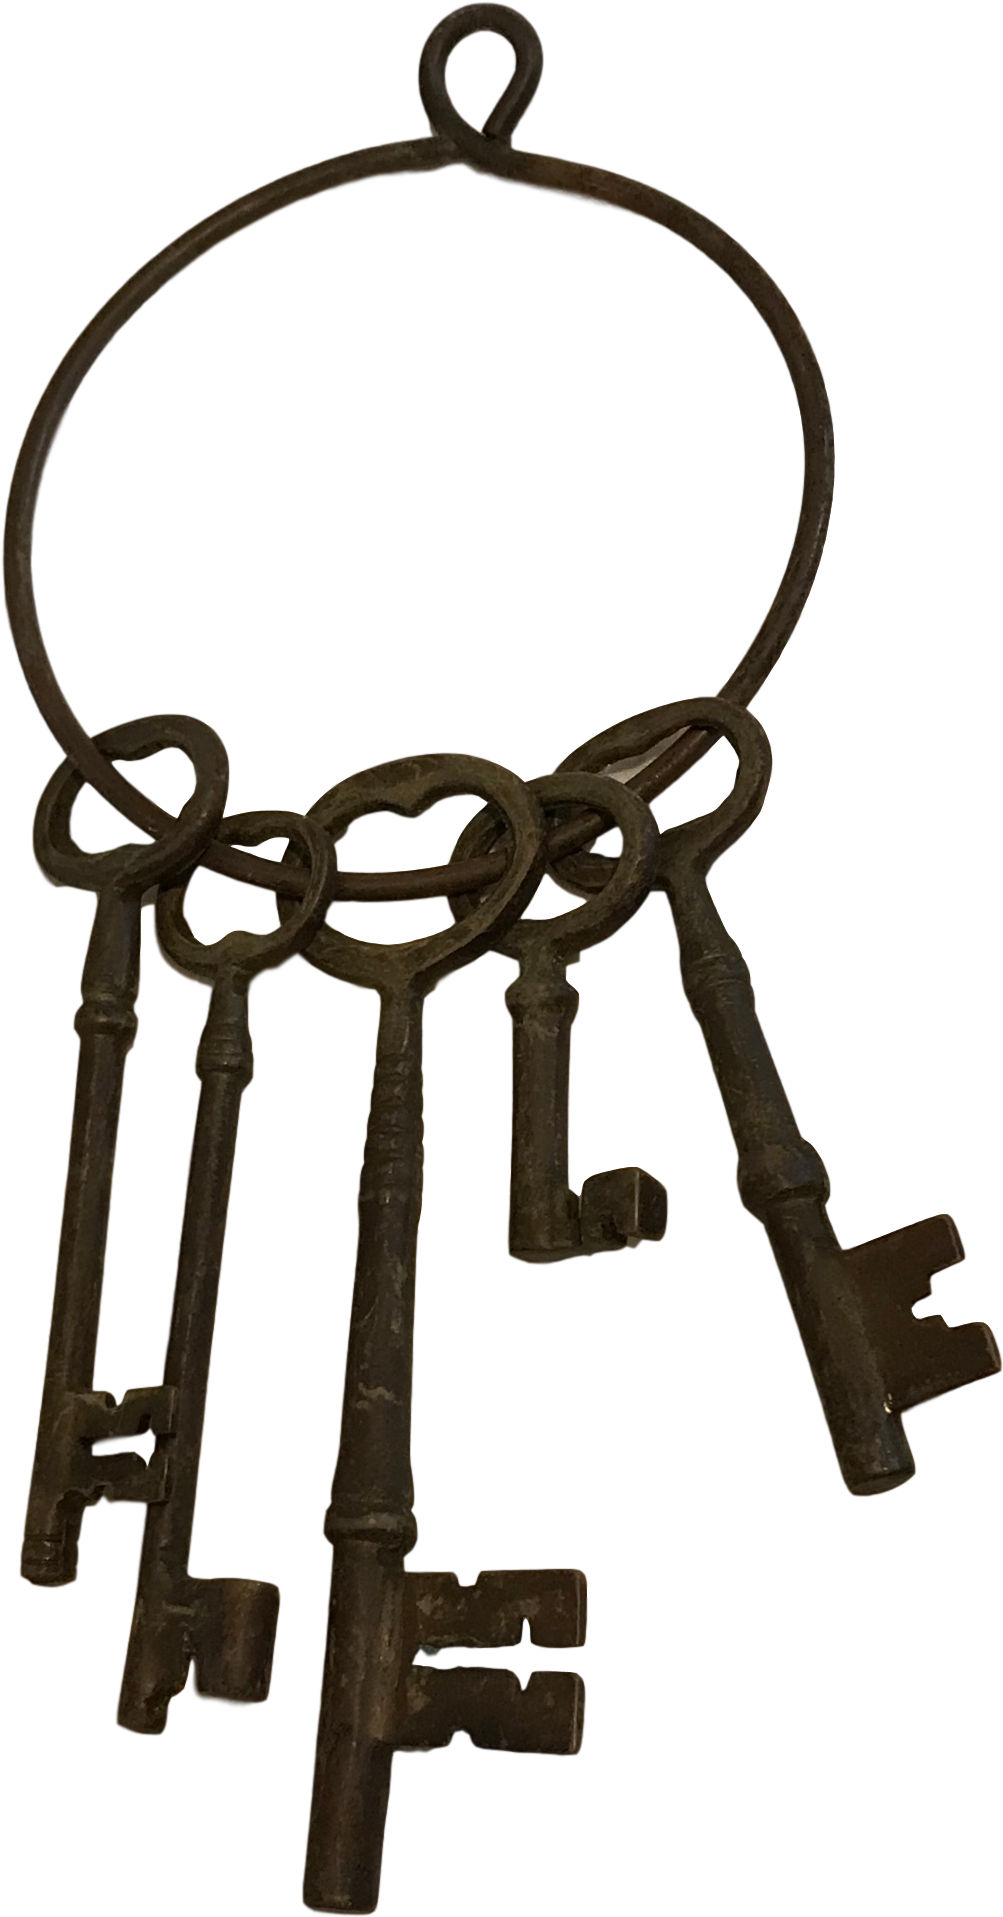 Authentic Antique Skeleton Keys & Ring - Farmhouse (1097x2102)